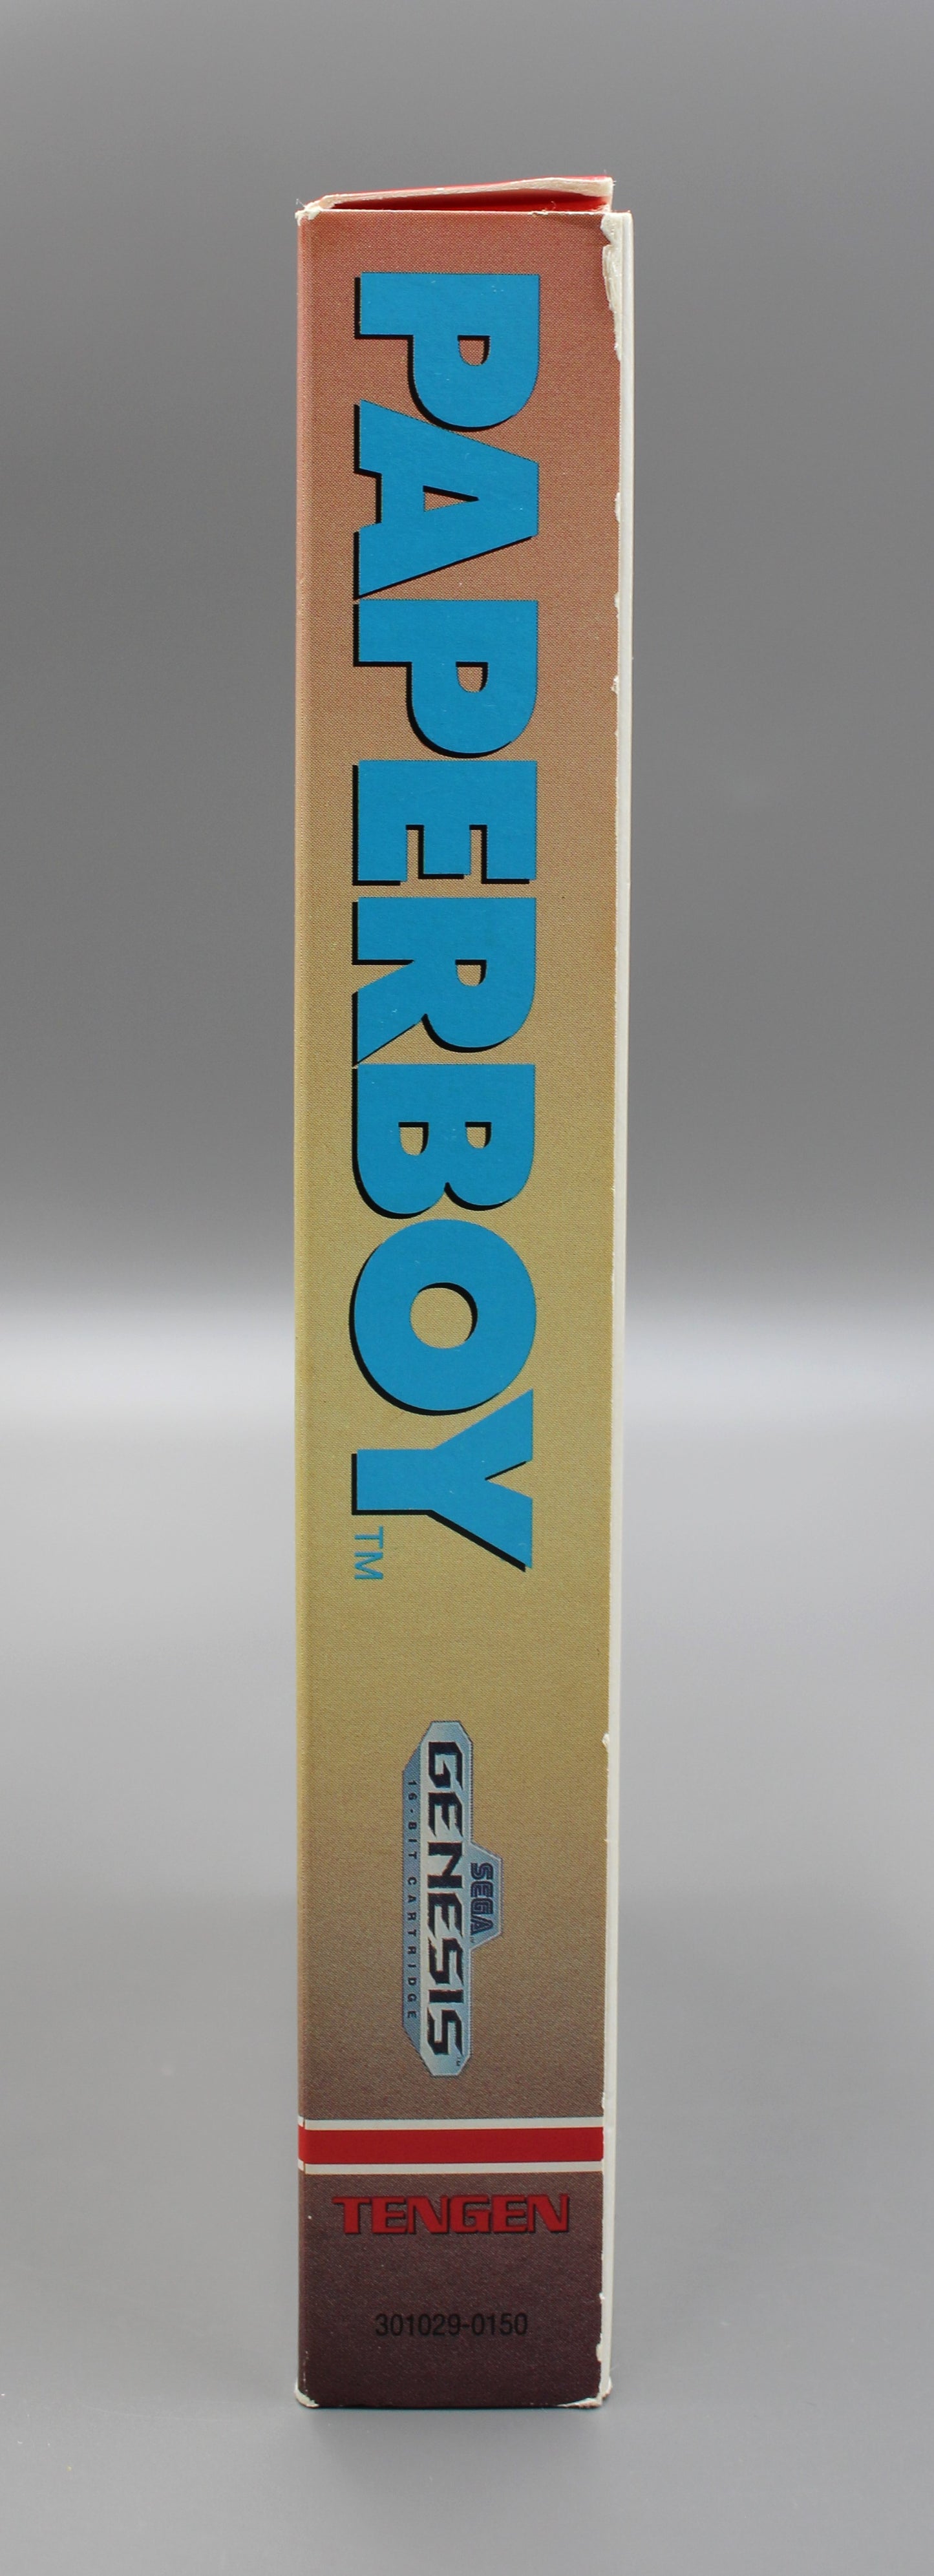 Paperboy (Sega Genesis, 1991) CIB, Complete W/Manual [Cardboard Box]